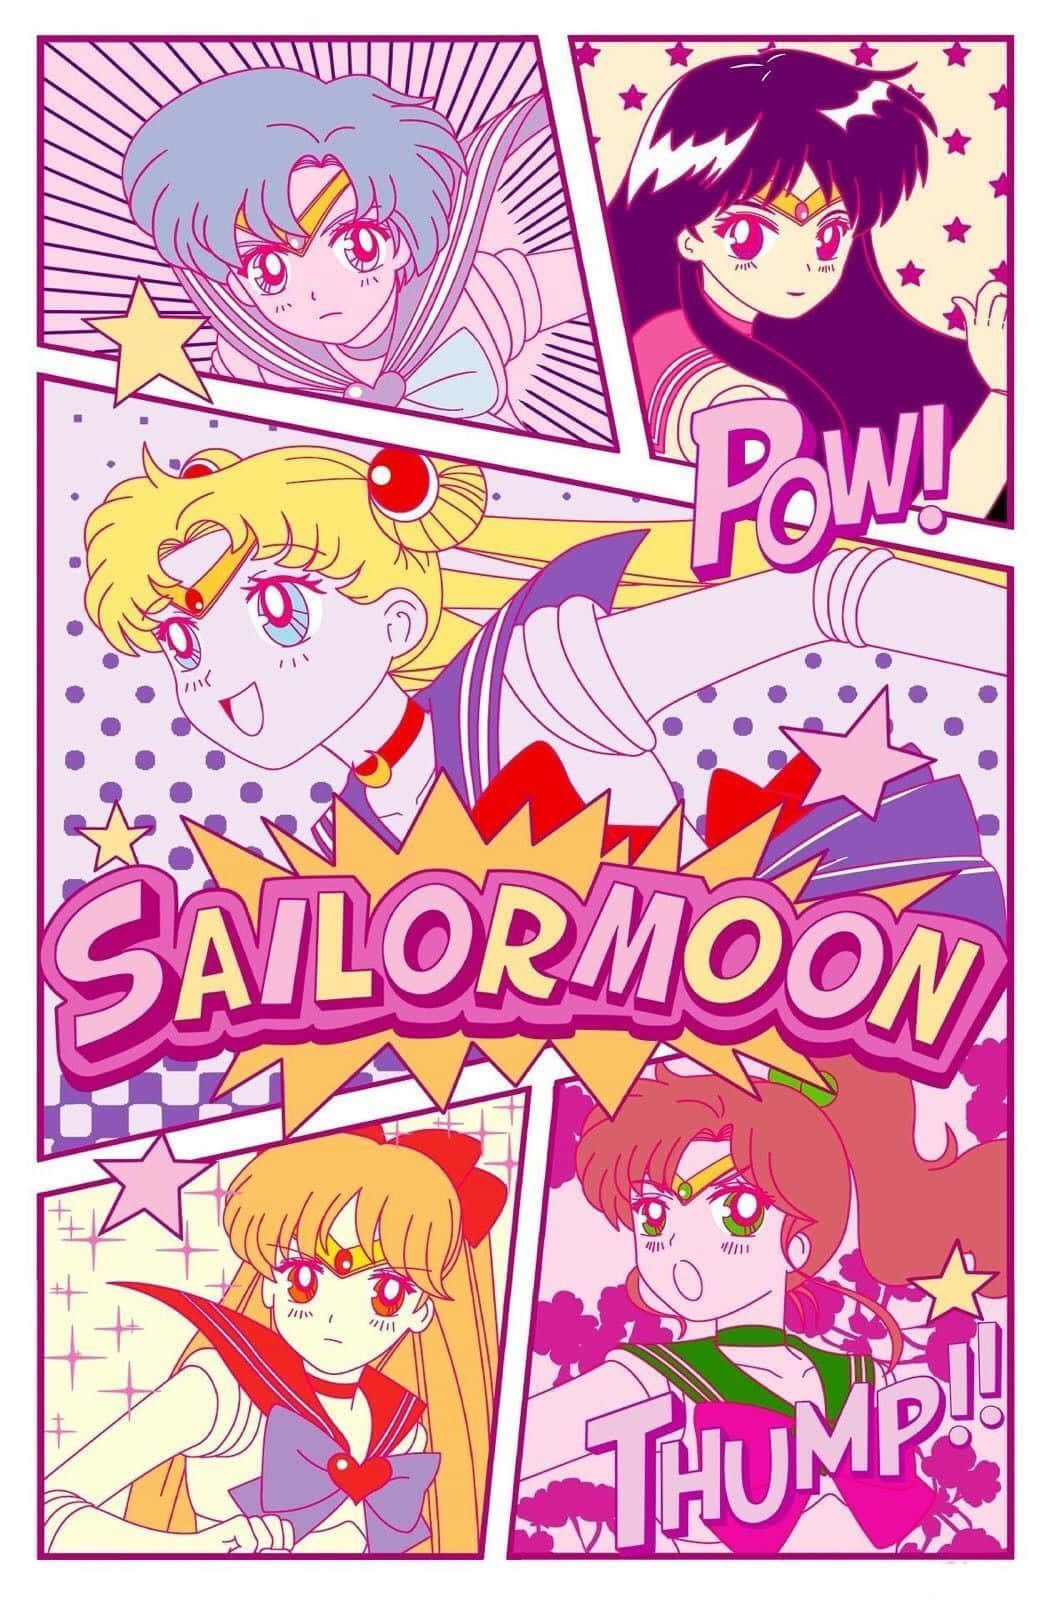 leo on Twitter Iphone Aesthetic Lockscreen Sailor Moon Wallpaper   ipcwallpapers httpstcoQmL9Xyh4wX  Twitter